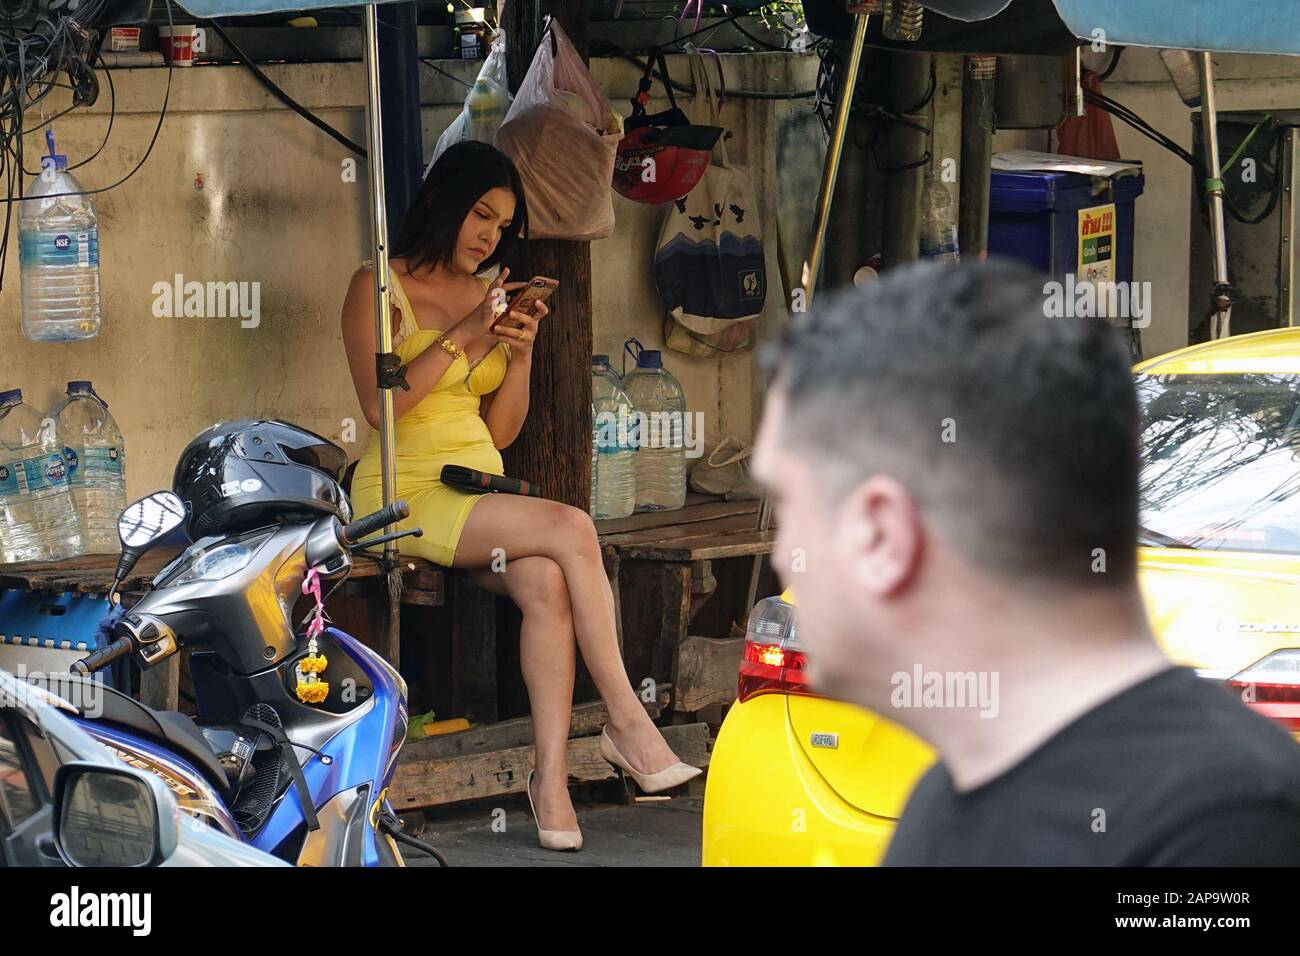 Bangkok, Thailand - December 26, 2019: Transgender woman, ladyboy, sitting on bench and using her phone. Man on foreground watching her. Stock Photo